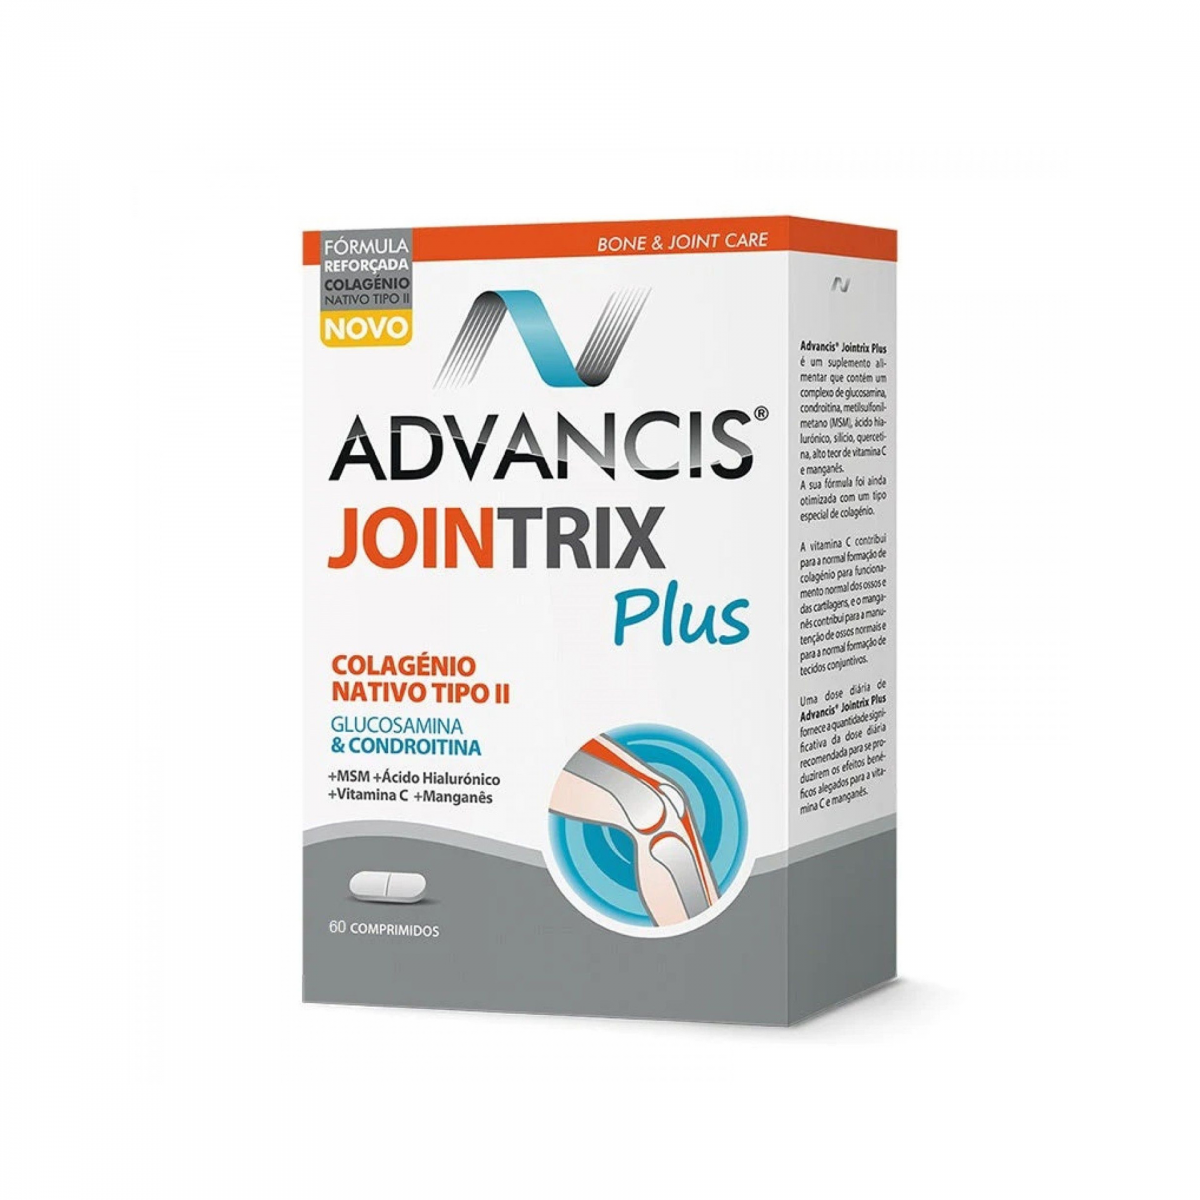 Advancis Jointrix Plus 30 pills